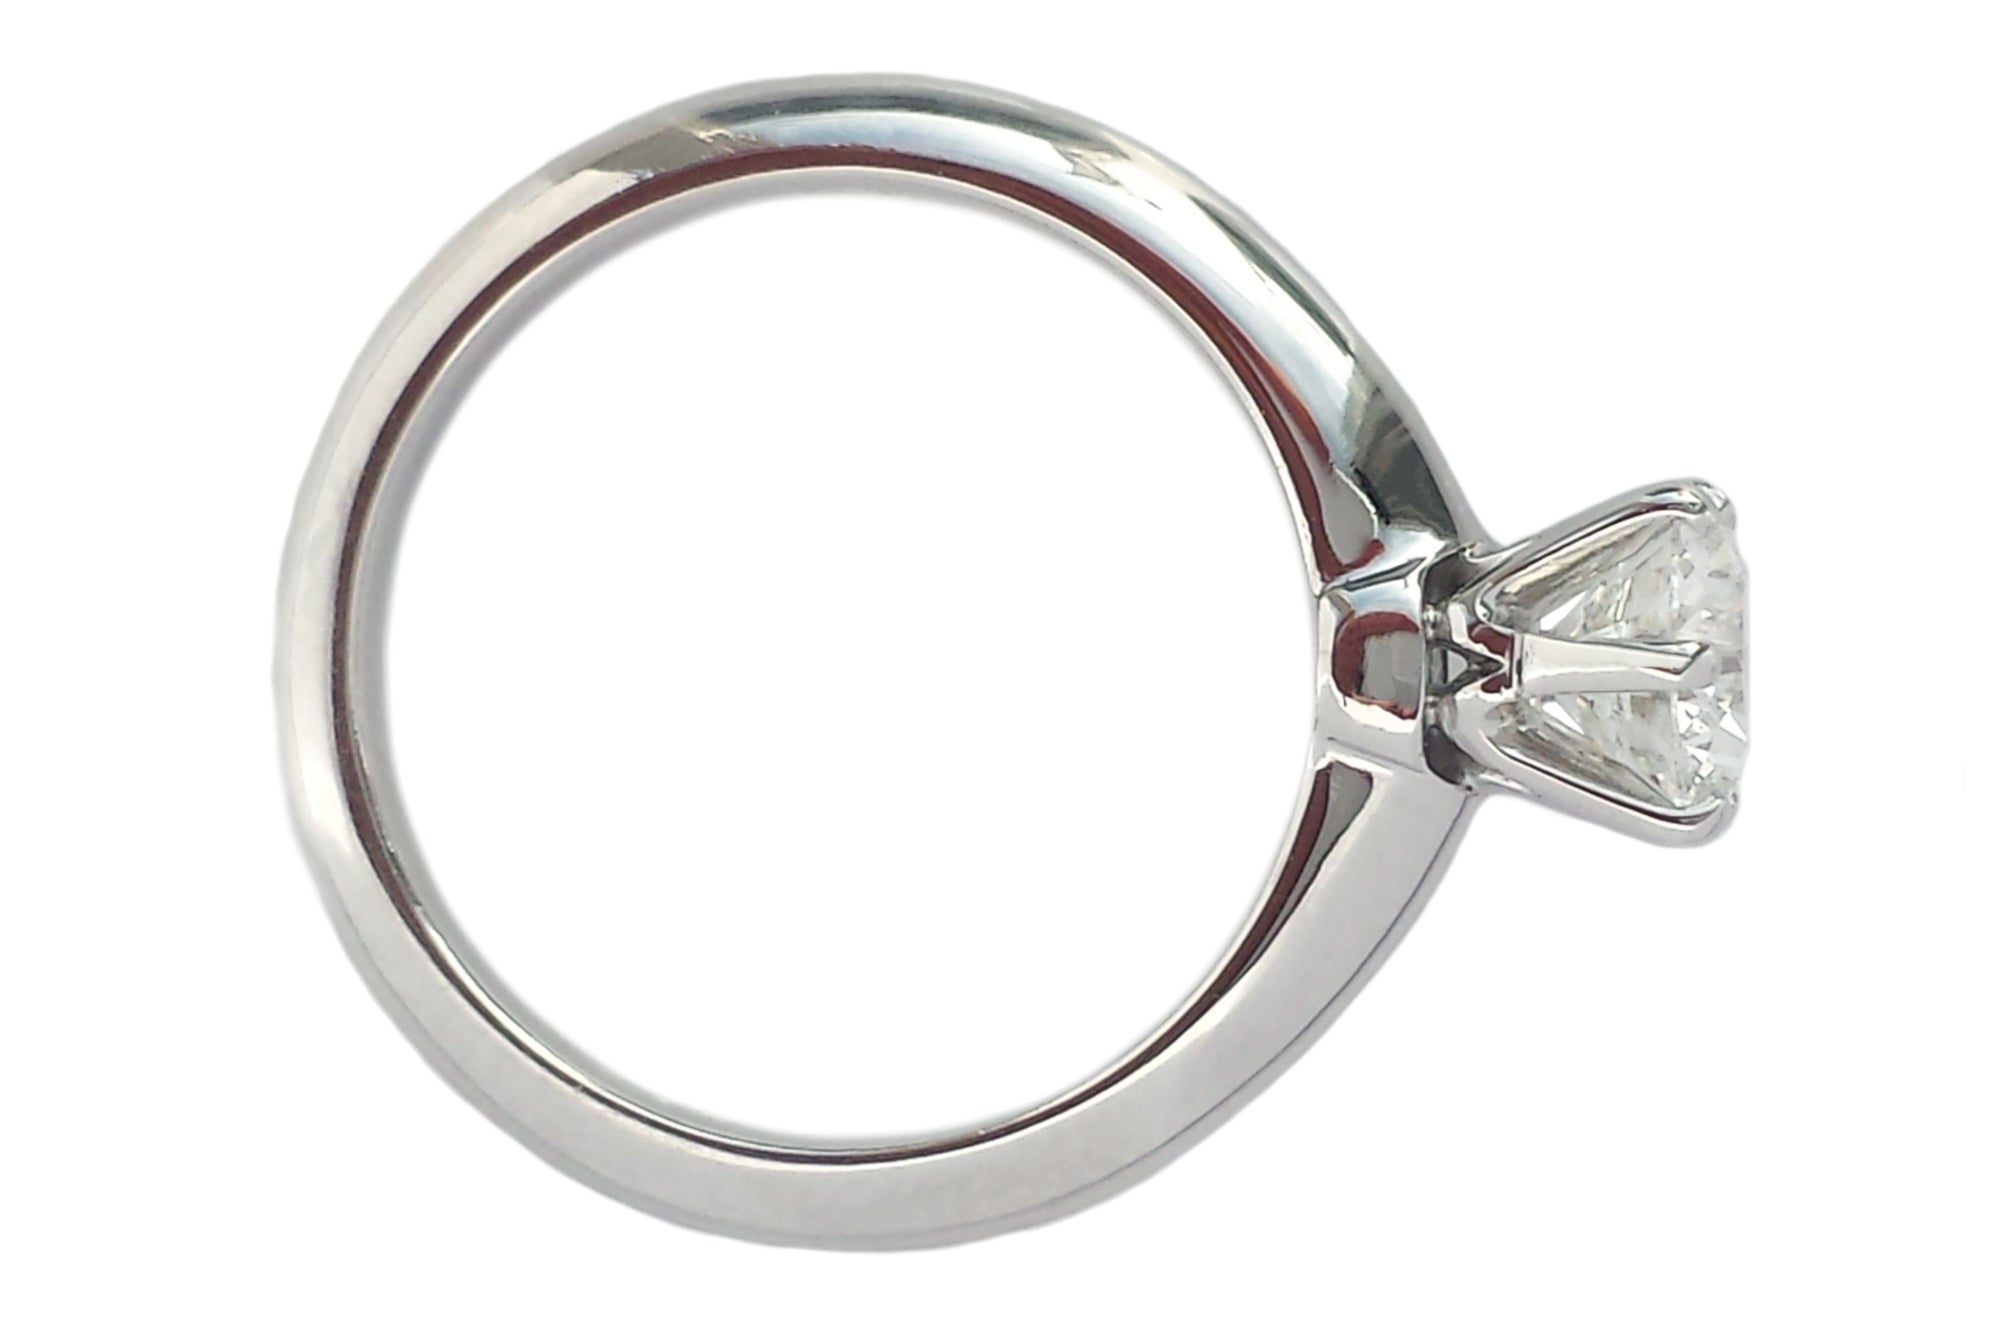 Tiffany & Co. 0.90ct H/VVS2 Triple XXX Round Brilliant Diamond Engagement Ring